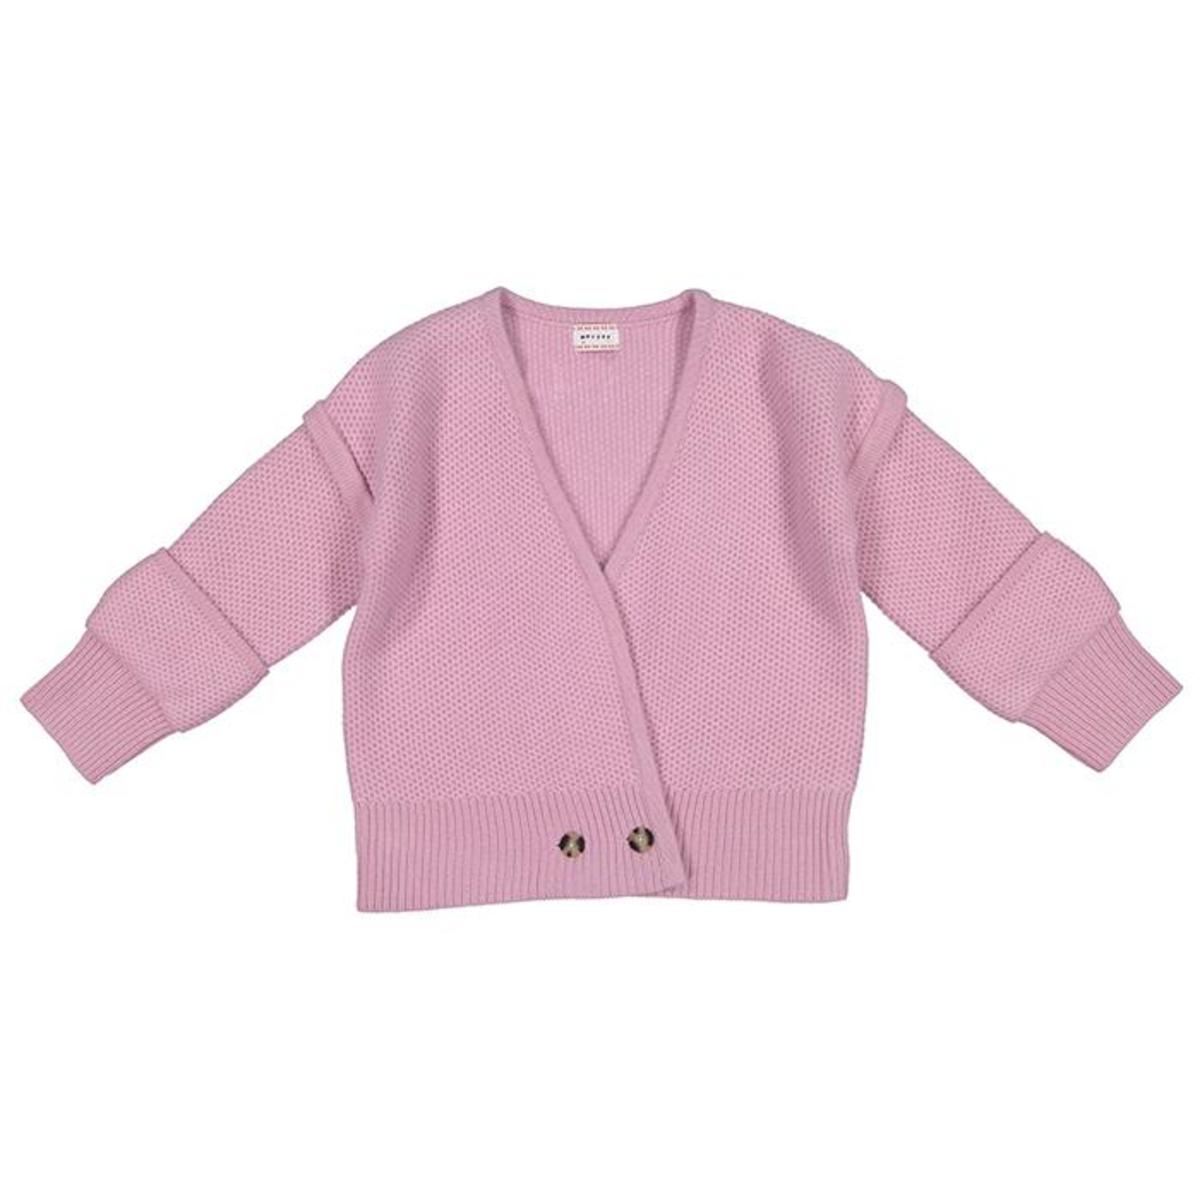 Morley Child Mono Cardigan Sweater Fuzzy